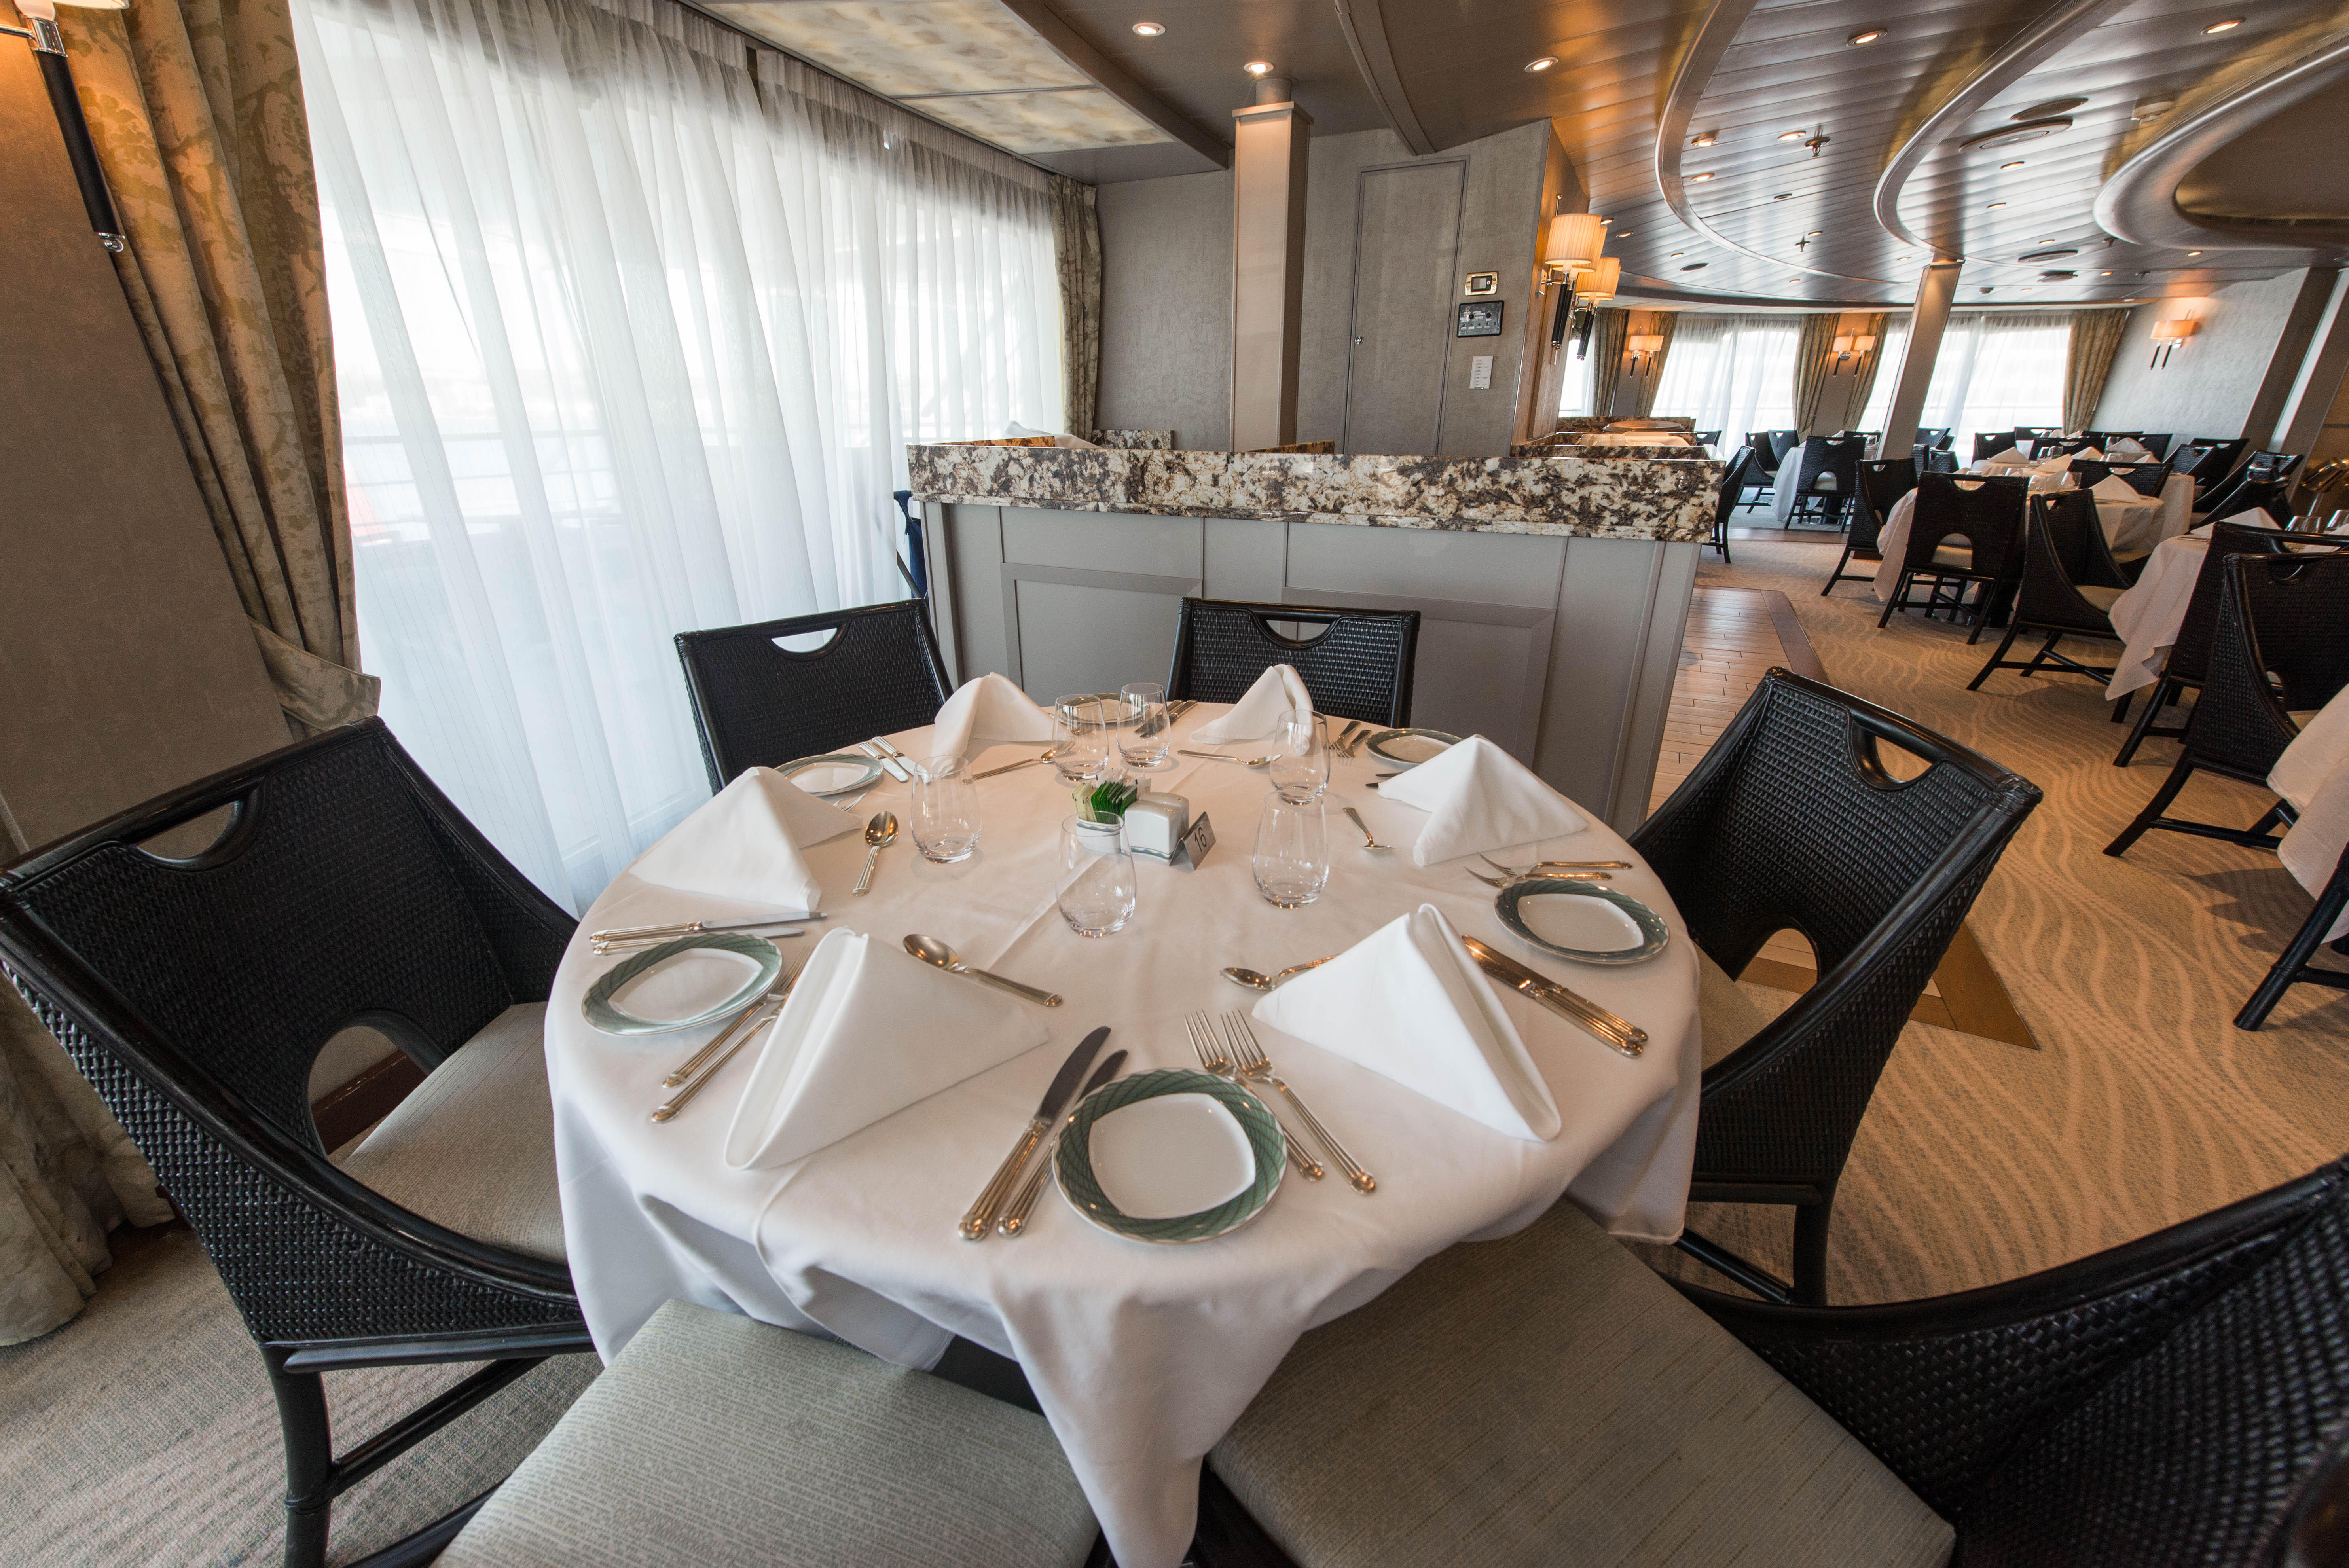 Seven Seas Navigator Dining: Restaurants & Food on Cruise Critic